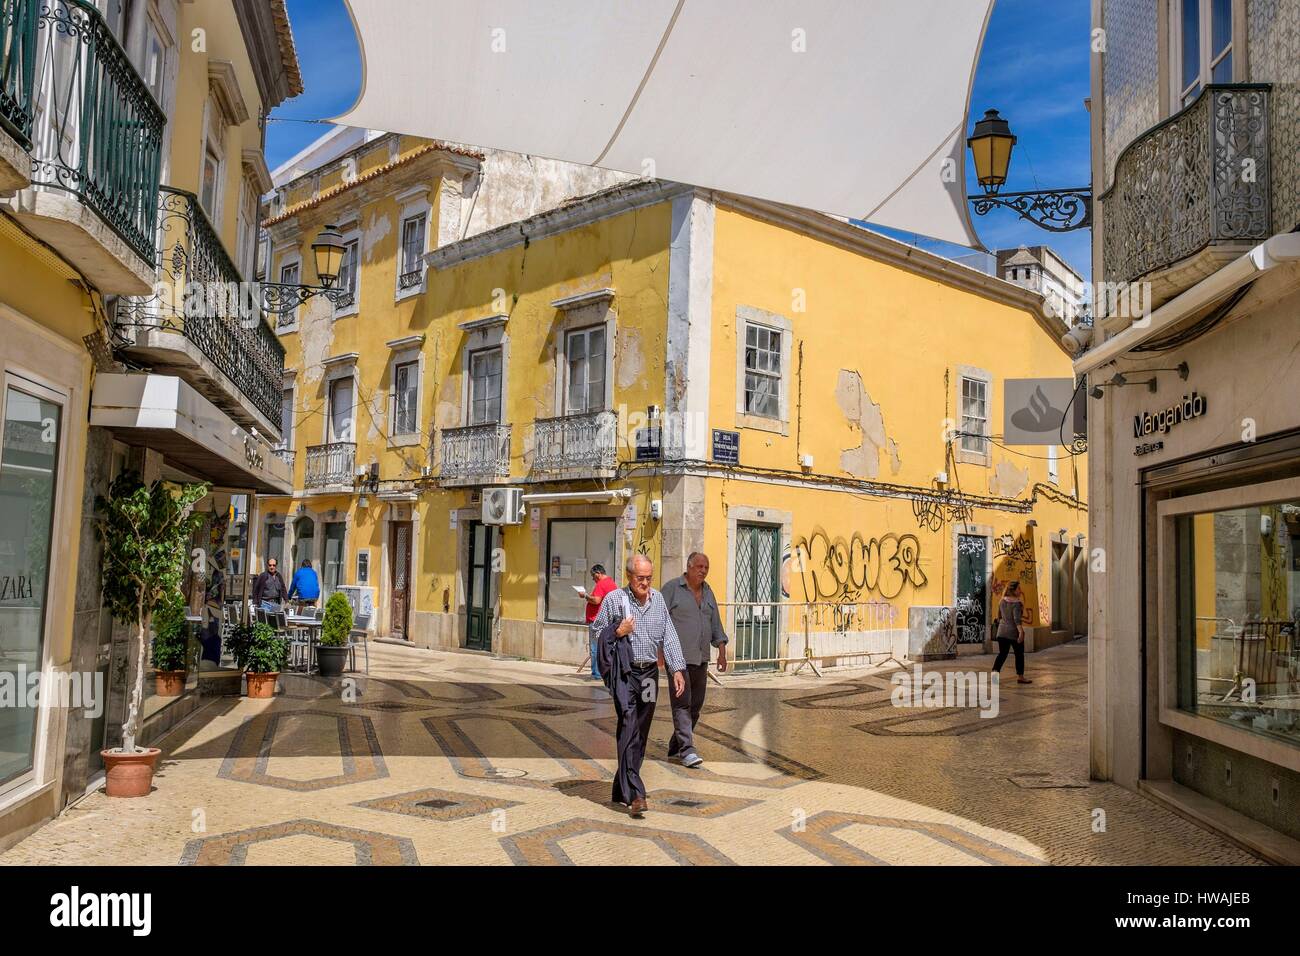 Portugal, Algarve region, Faro, old town, pedestrian shopping street Stock  Photo - Alamy